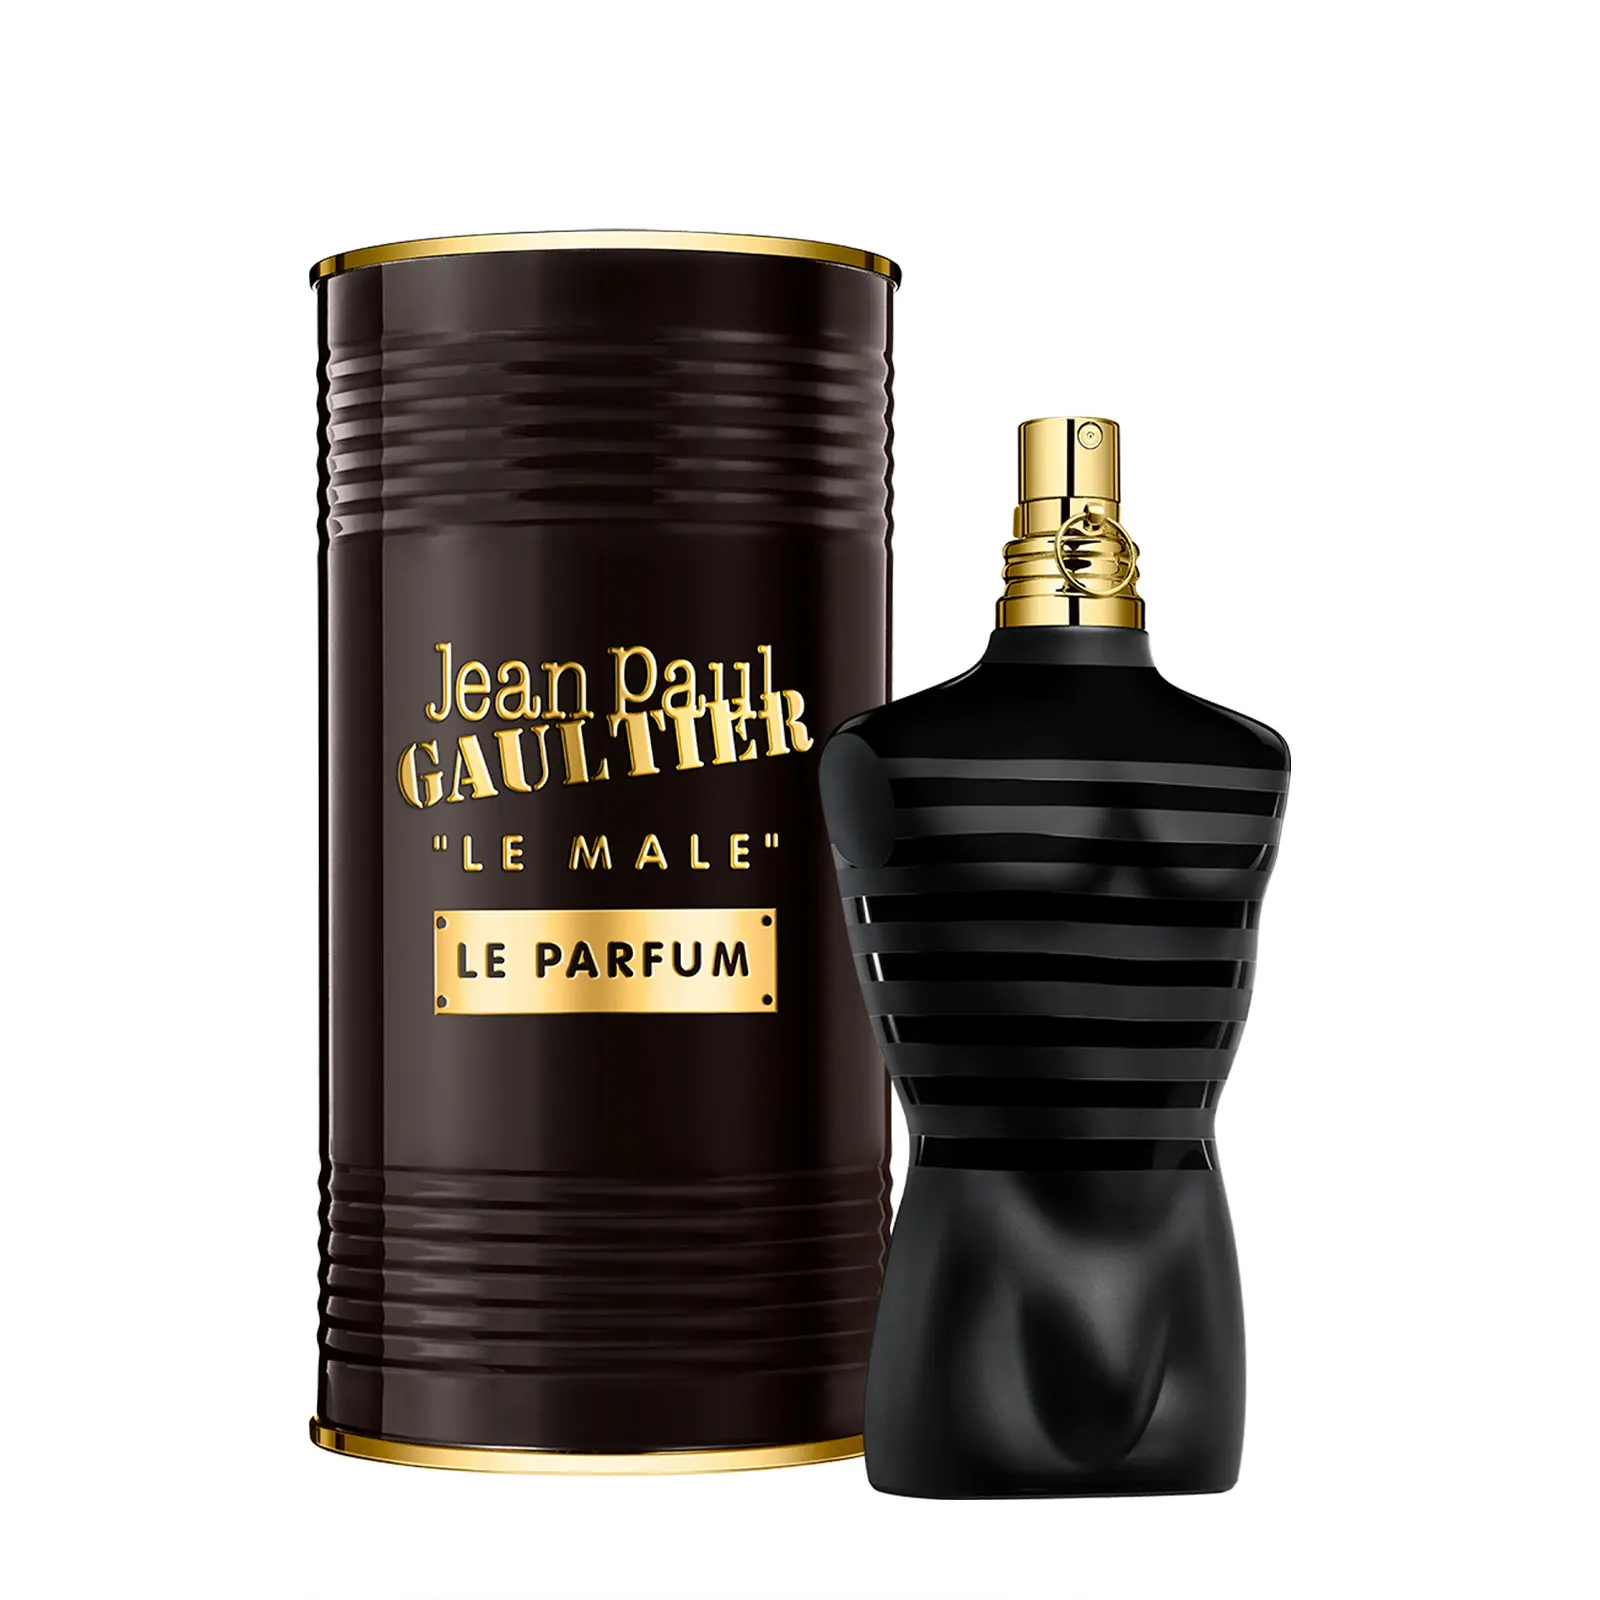 Le Male Eau de Parfum from Jean Paul Gaultier 